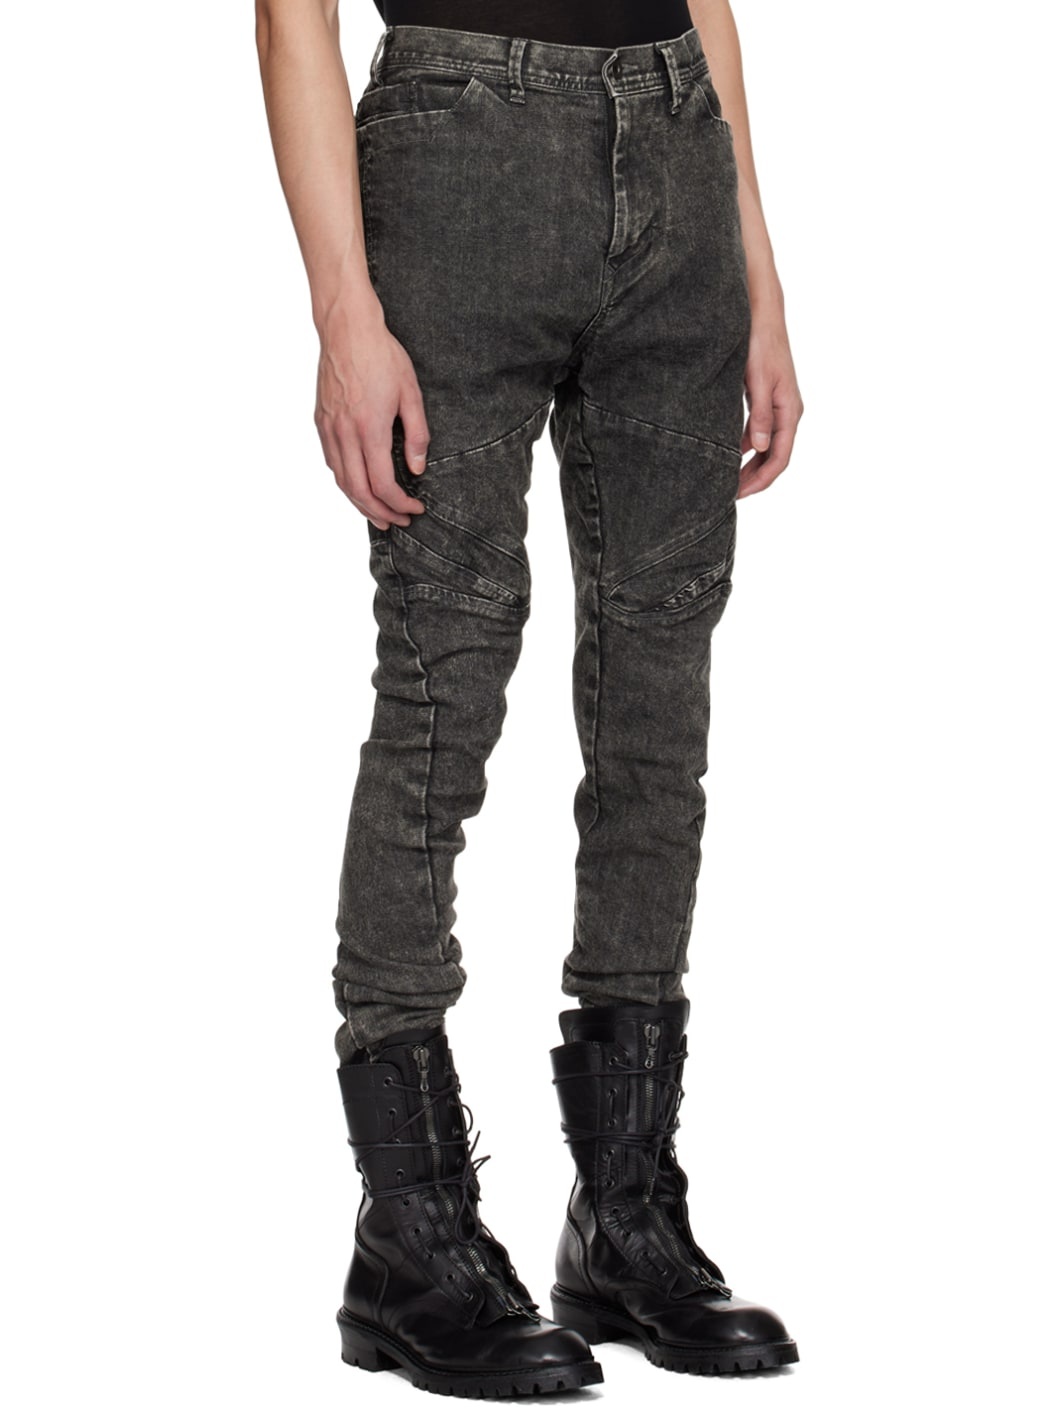 Gray Rider Jeans - 2